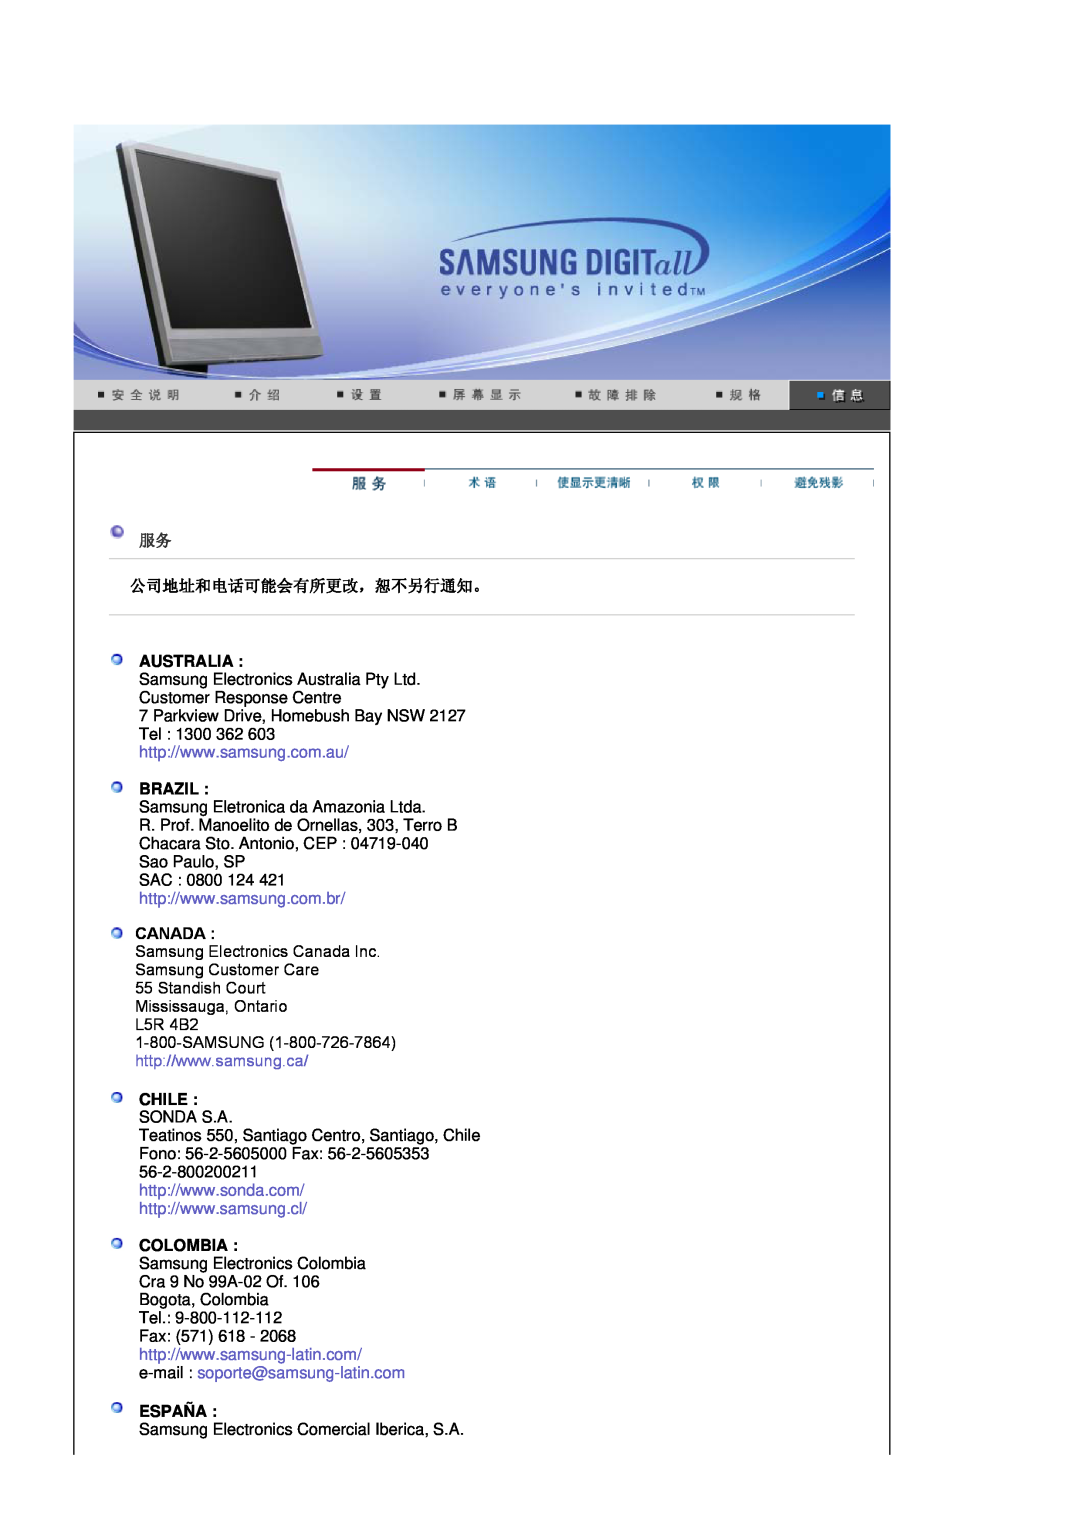 Samsung LS17MJSTSE/EDC, MJ19MSTSQ/EDC 公司地址和电话可能会有所更改，恕不另行通知。, Australia, Brazil, Canada, Chile Sonda S.A, Colombia, España 